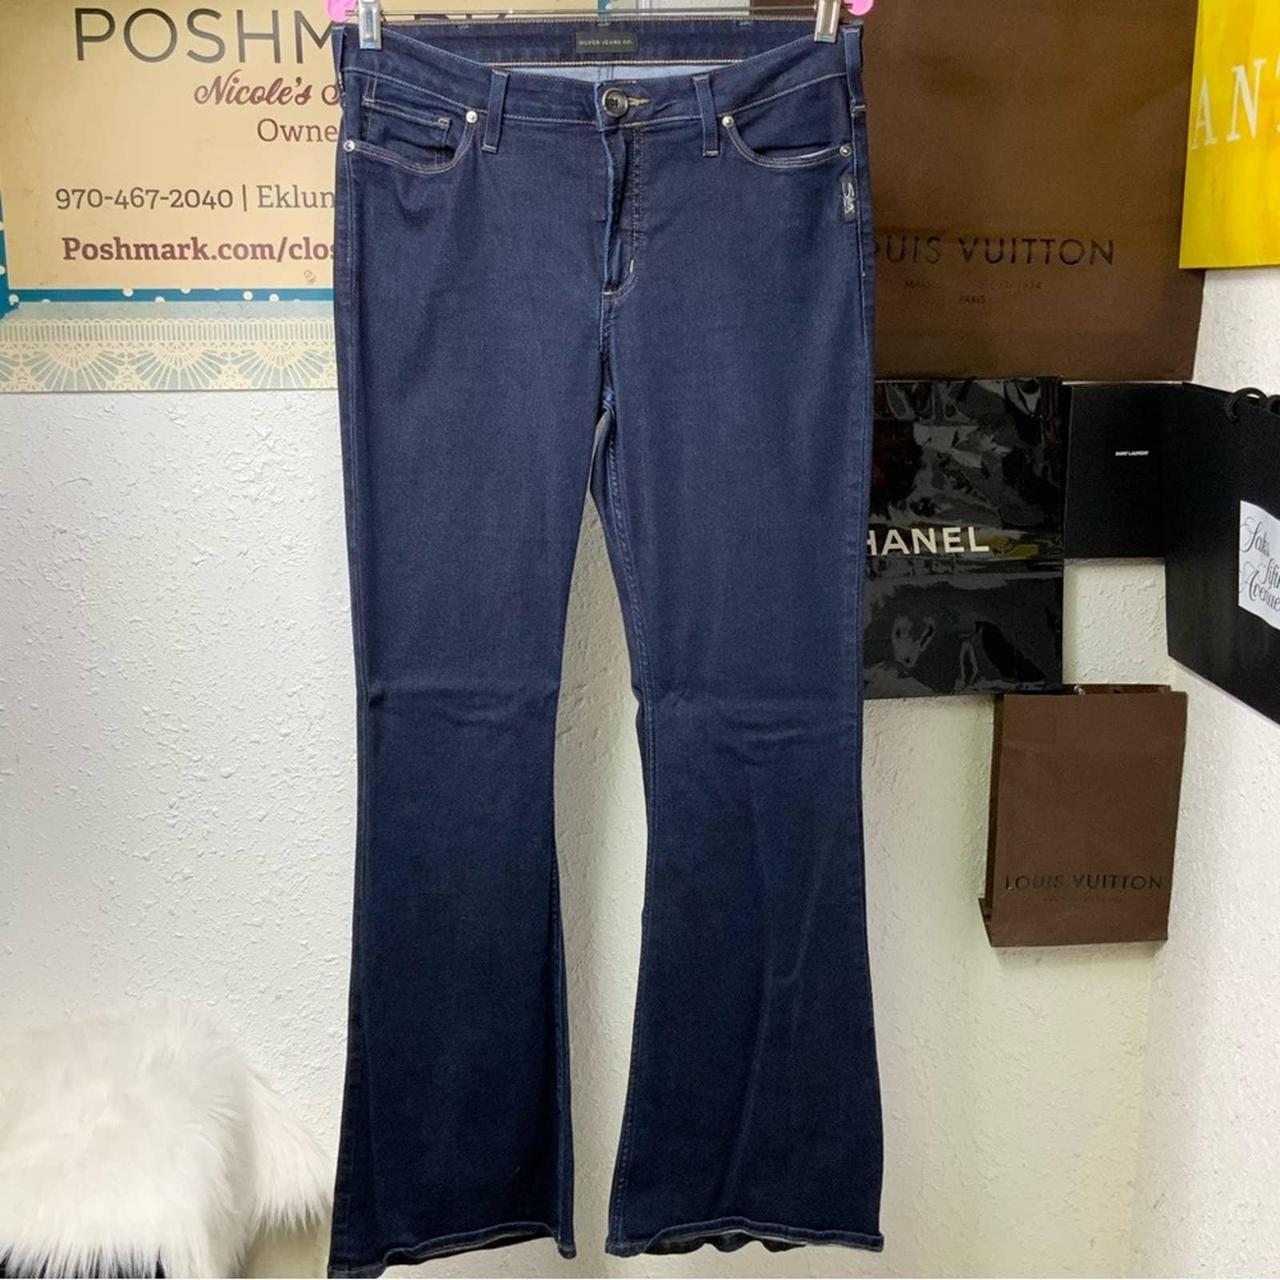 Louis Vuitton Jeans for Women - Poshmark